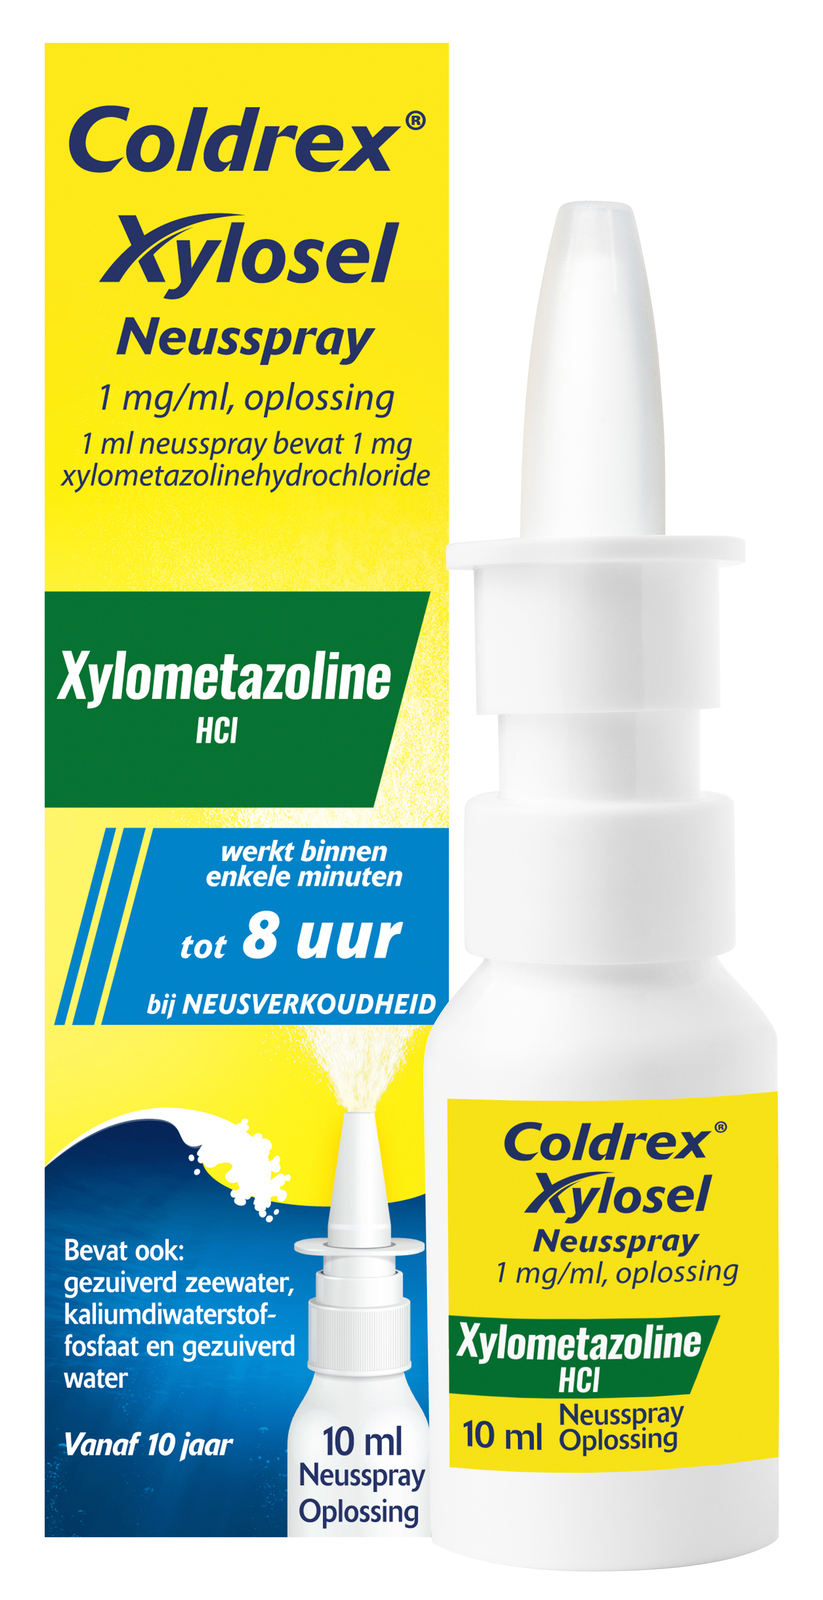 Coldrex Coldrex Neusspray Xylosel 1mg/ml - xylometazoline neusspray bij neusverkoudheid